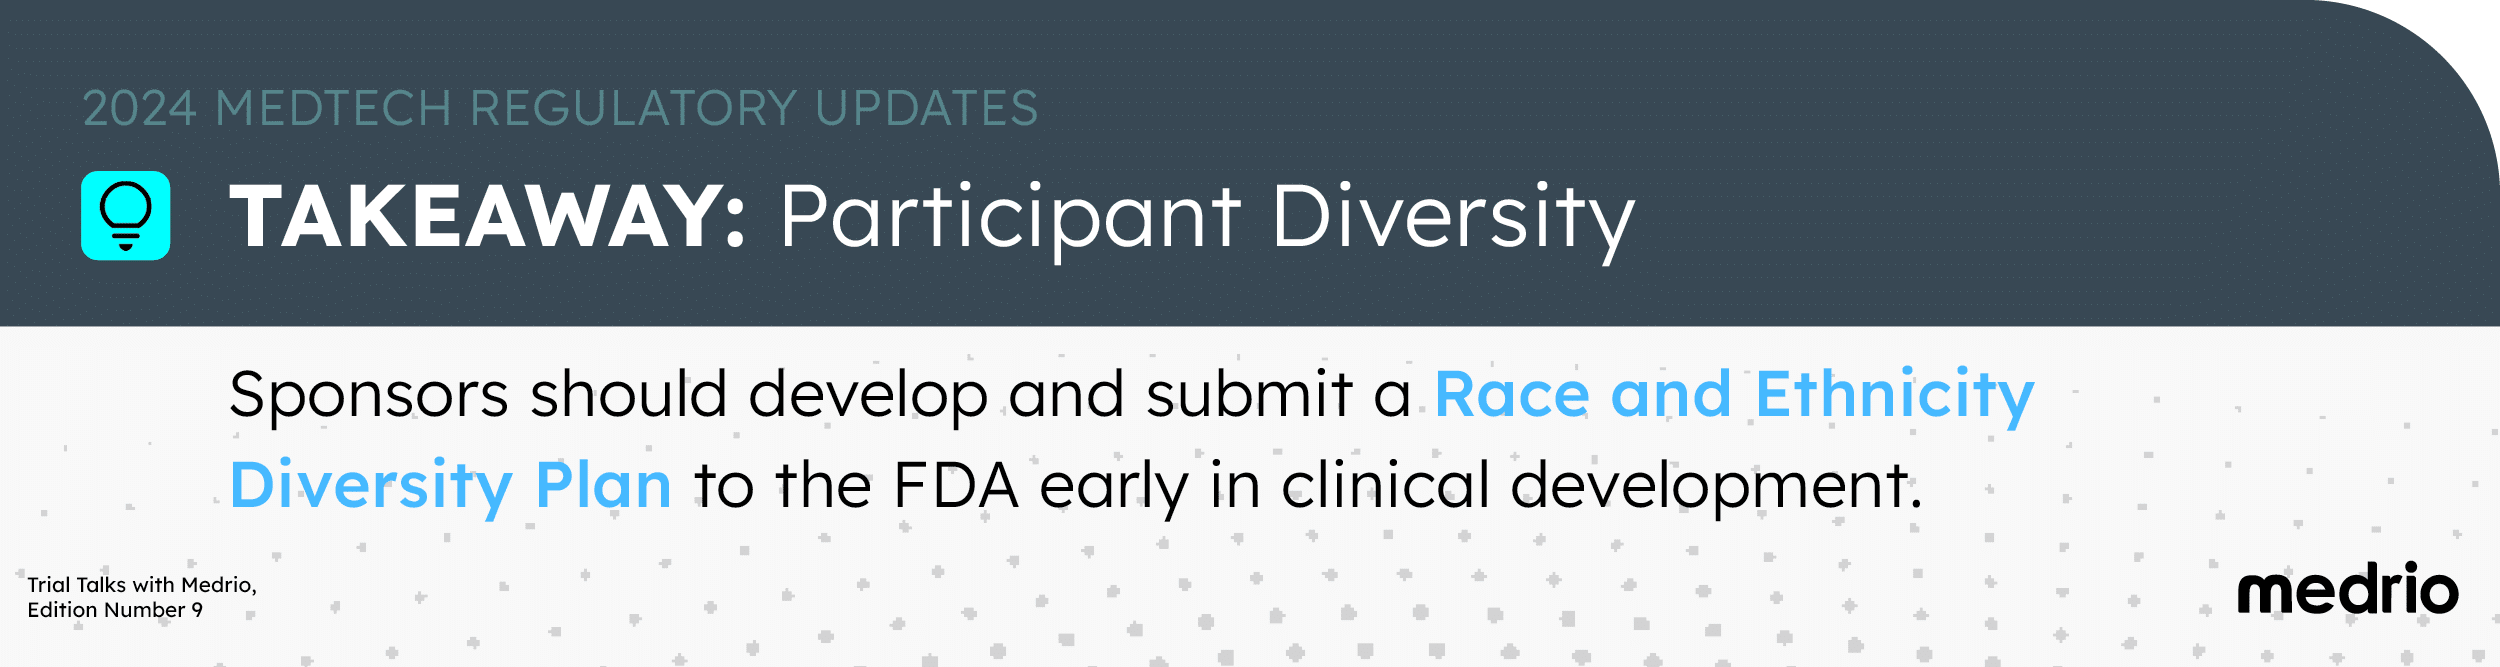 2024 Medtech Regulatory Key Takeaway for Participant Diversity